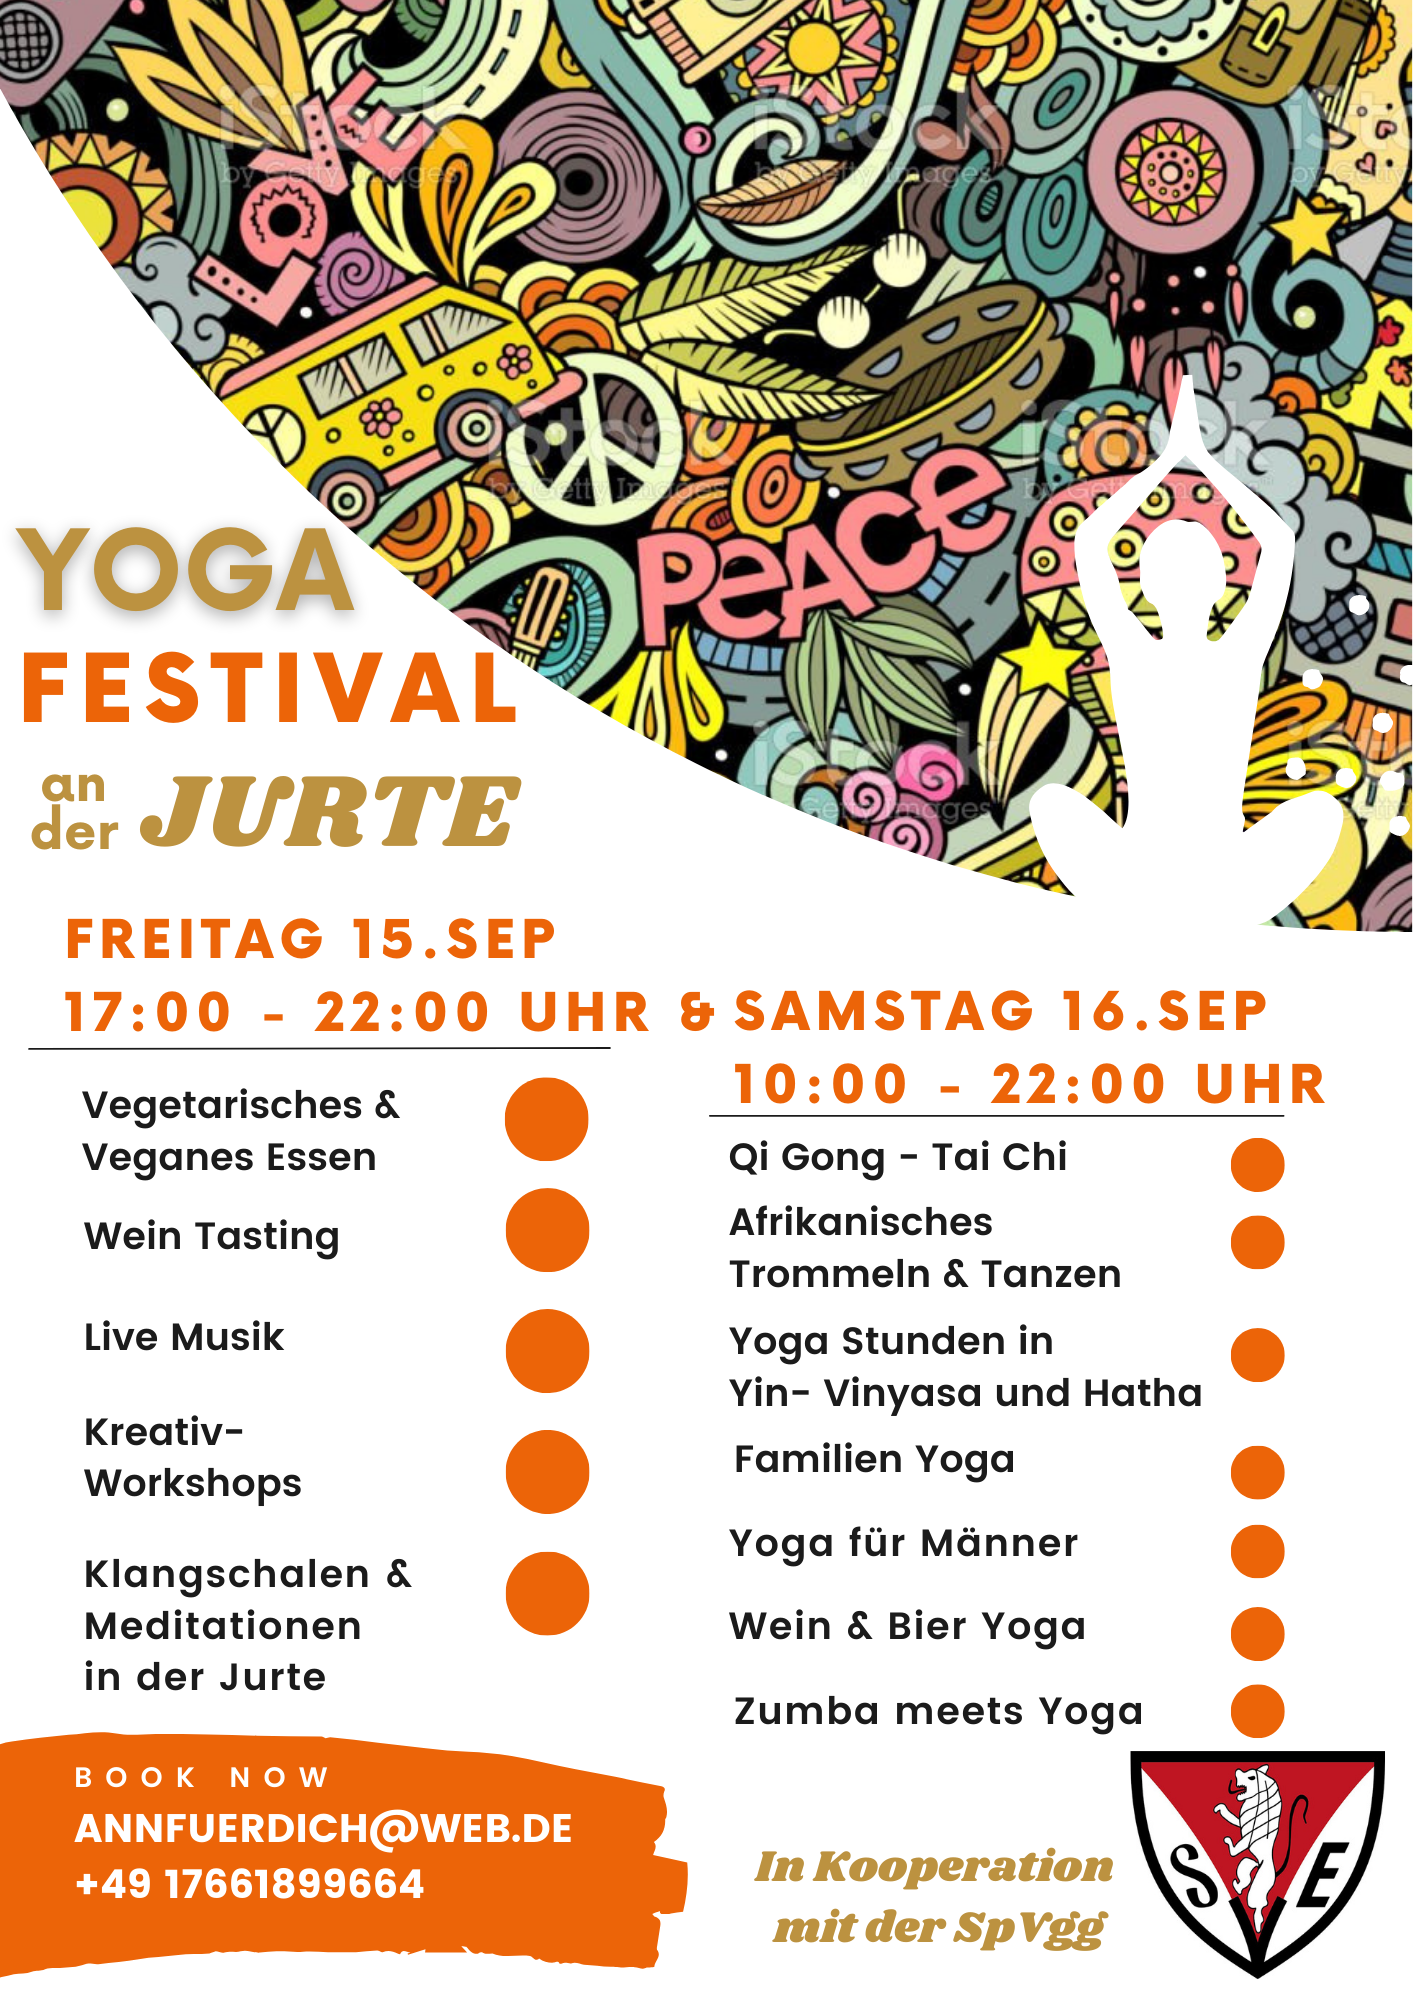 Yoga Festival und Jurte